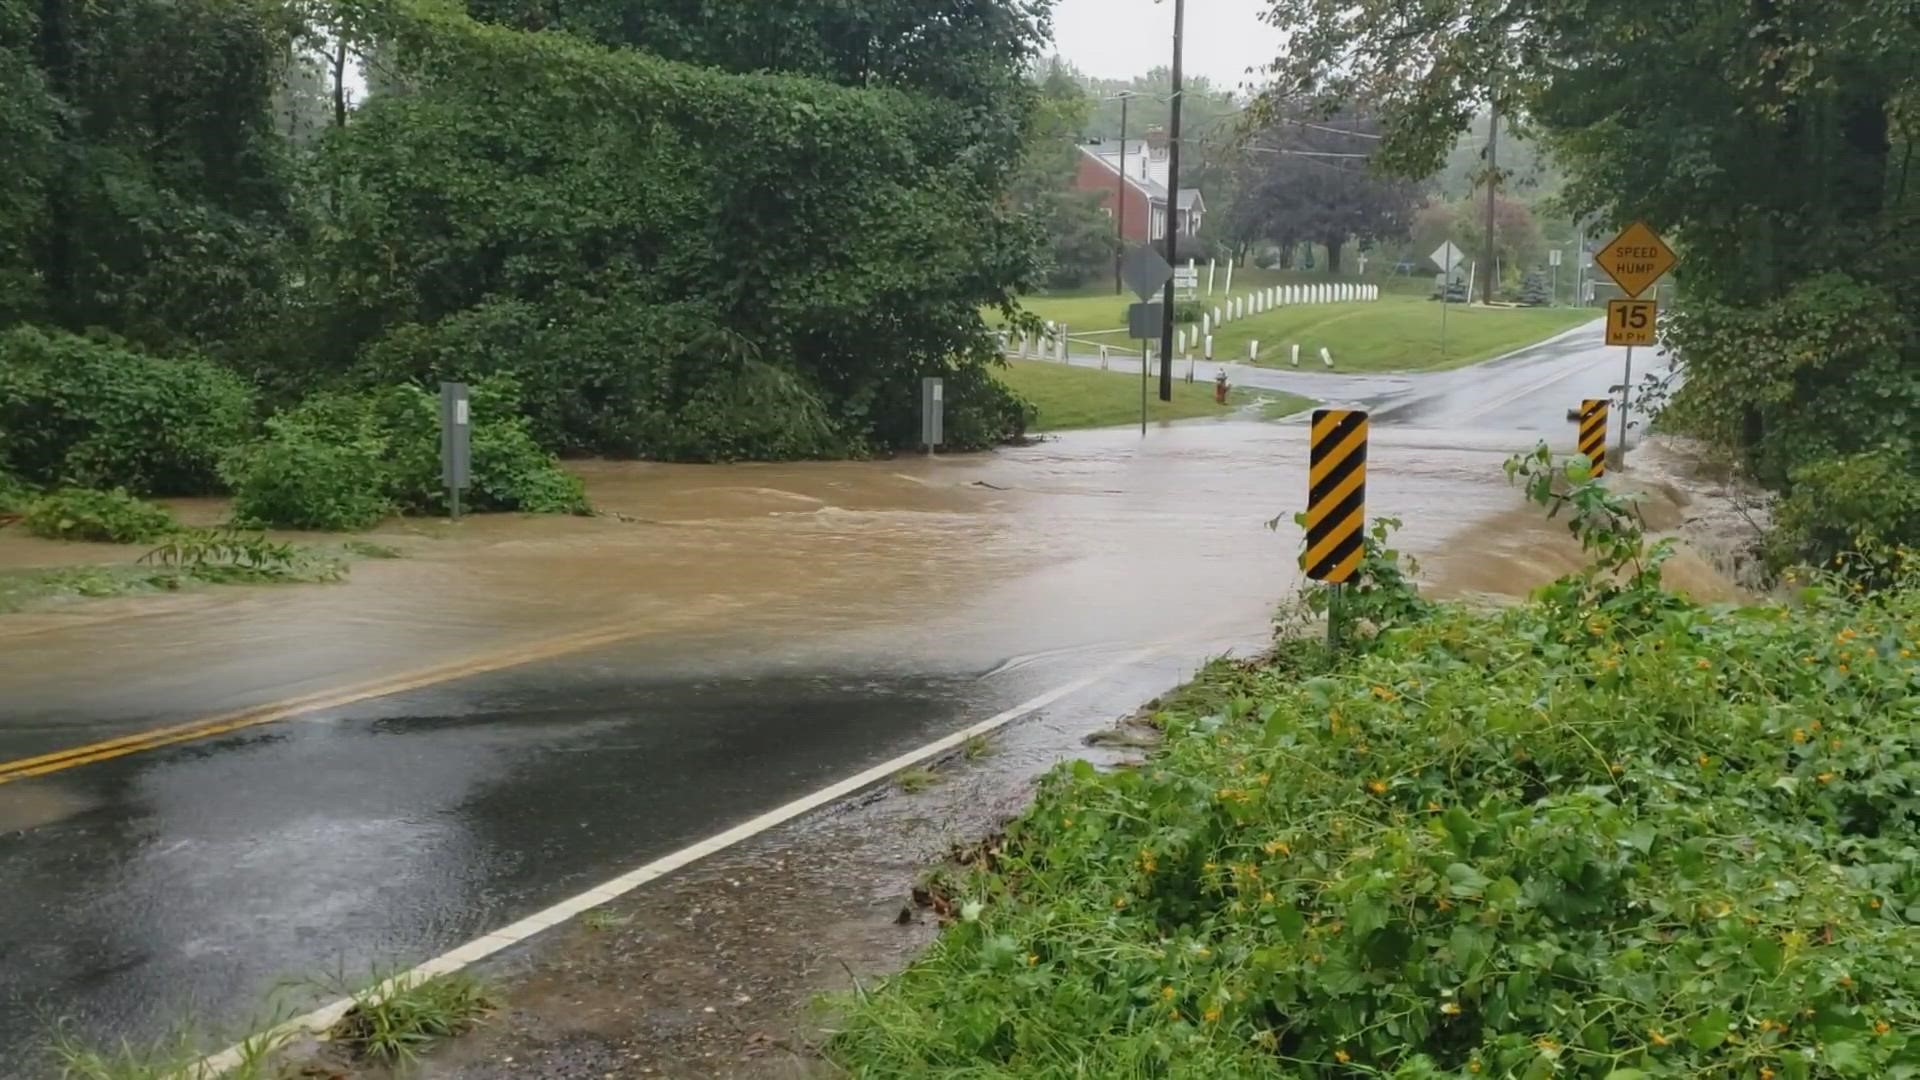 Flooding in Annandale, Virginia. 
Credit: Martyn Williams
Credit: Martyn Williams